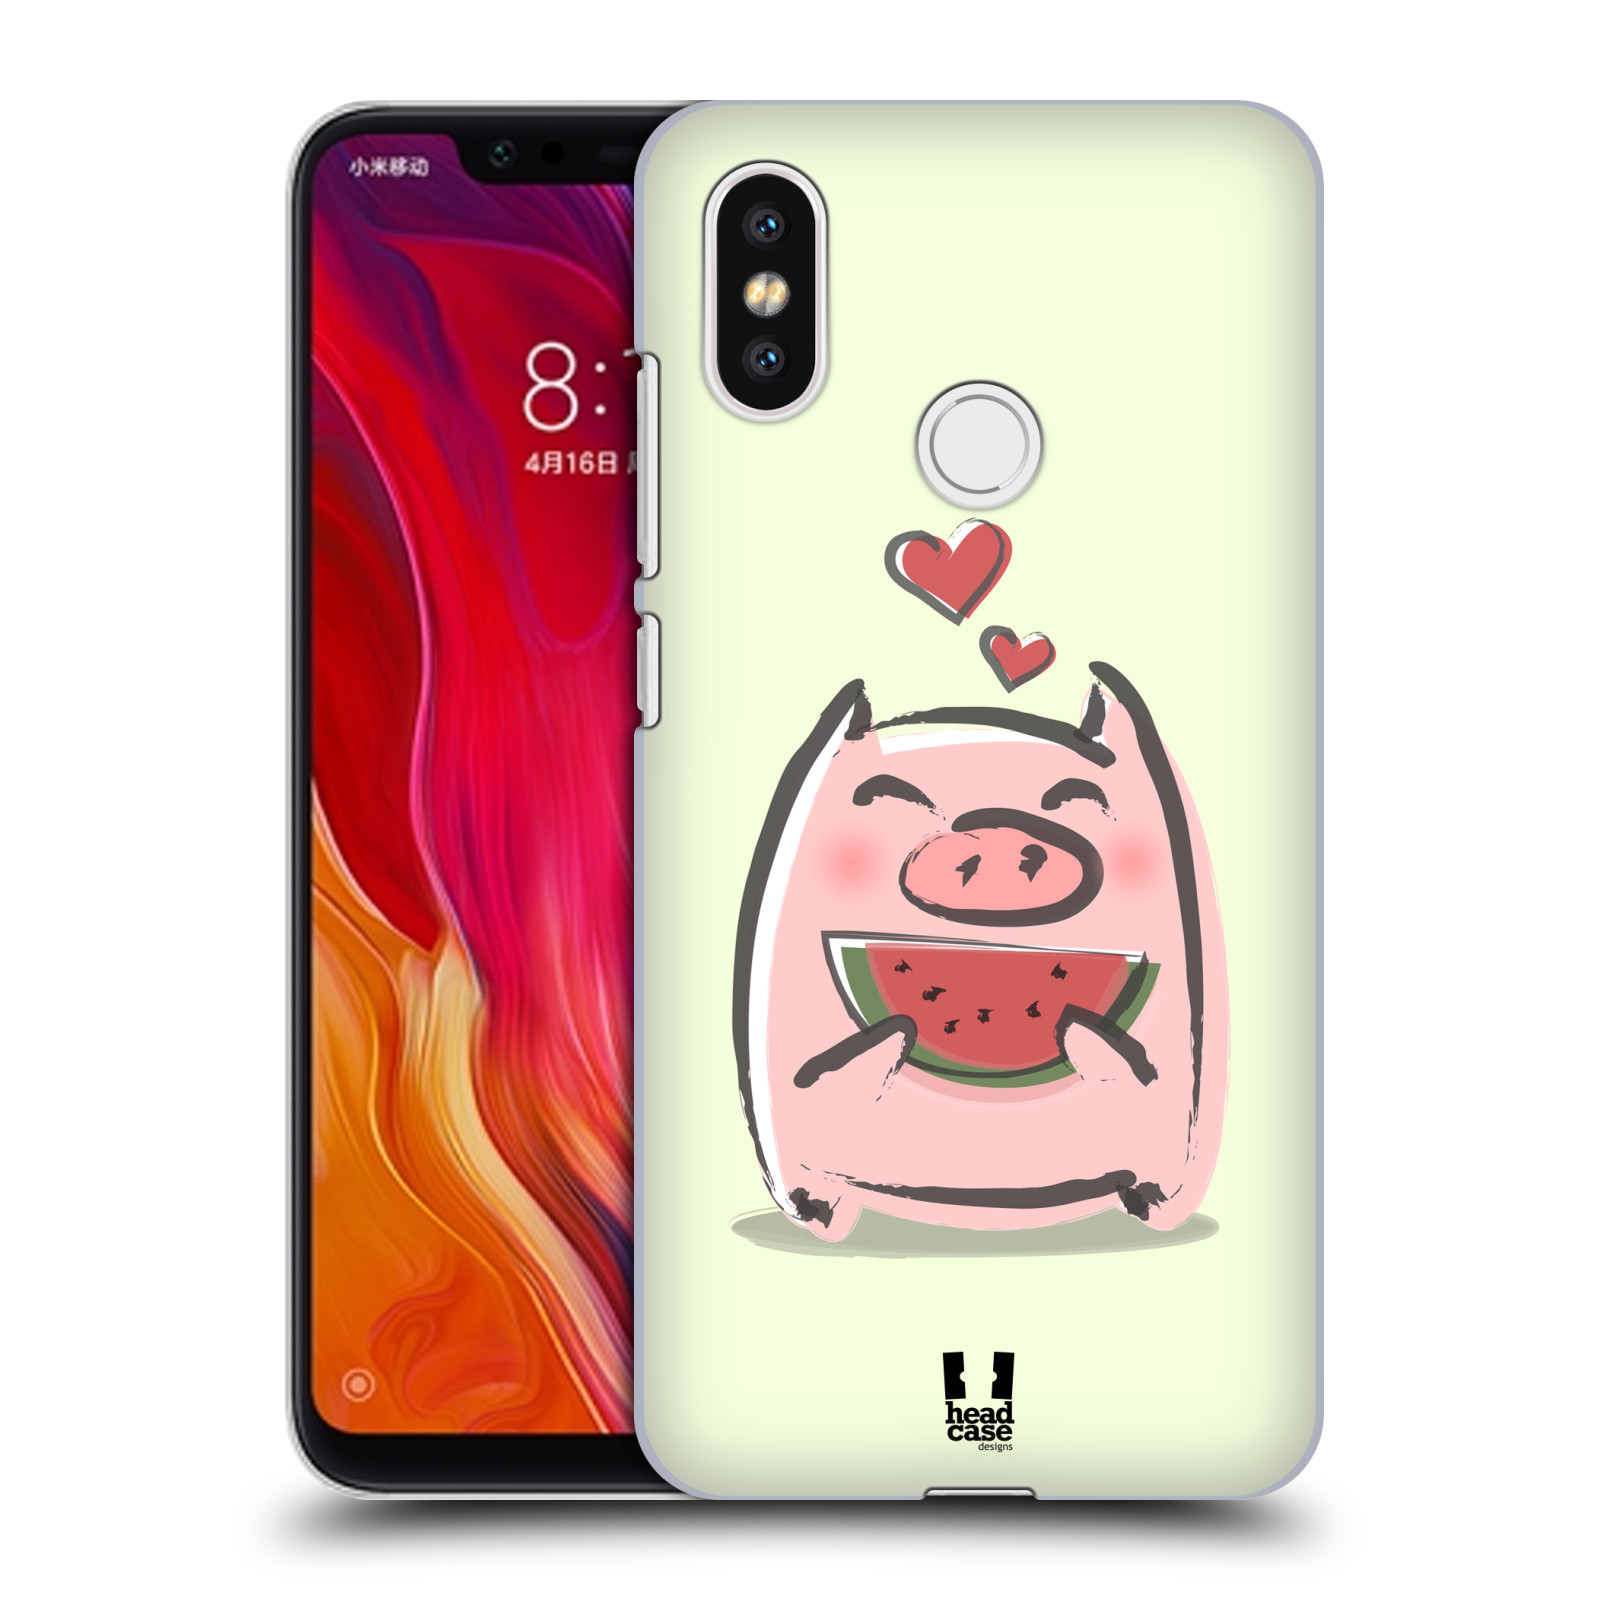 HEAD CASE plastový obal na mobil Xiaomi Mi 8 vzor roztomilé růžové prasátko vodní meloun